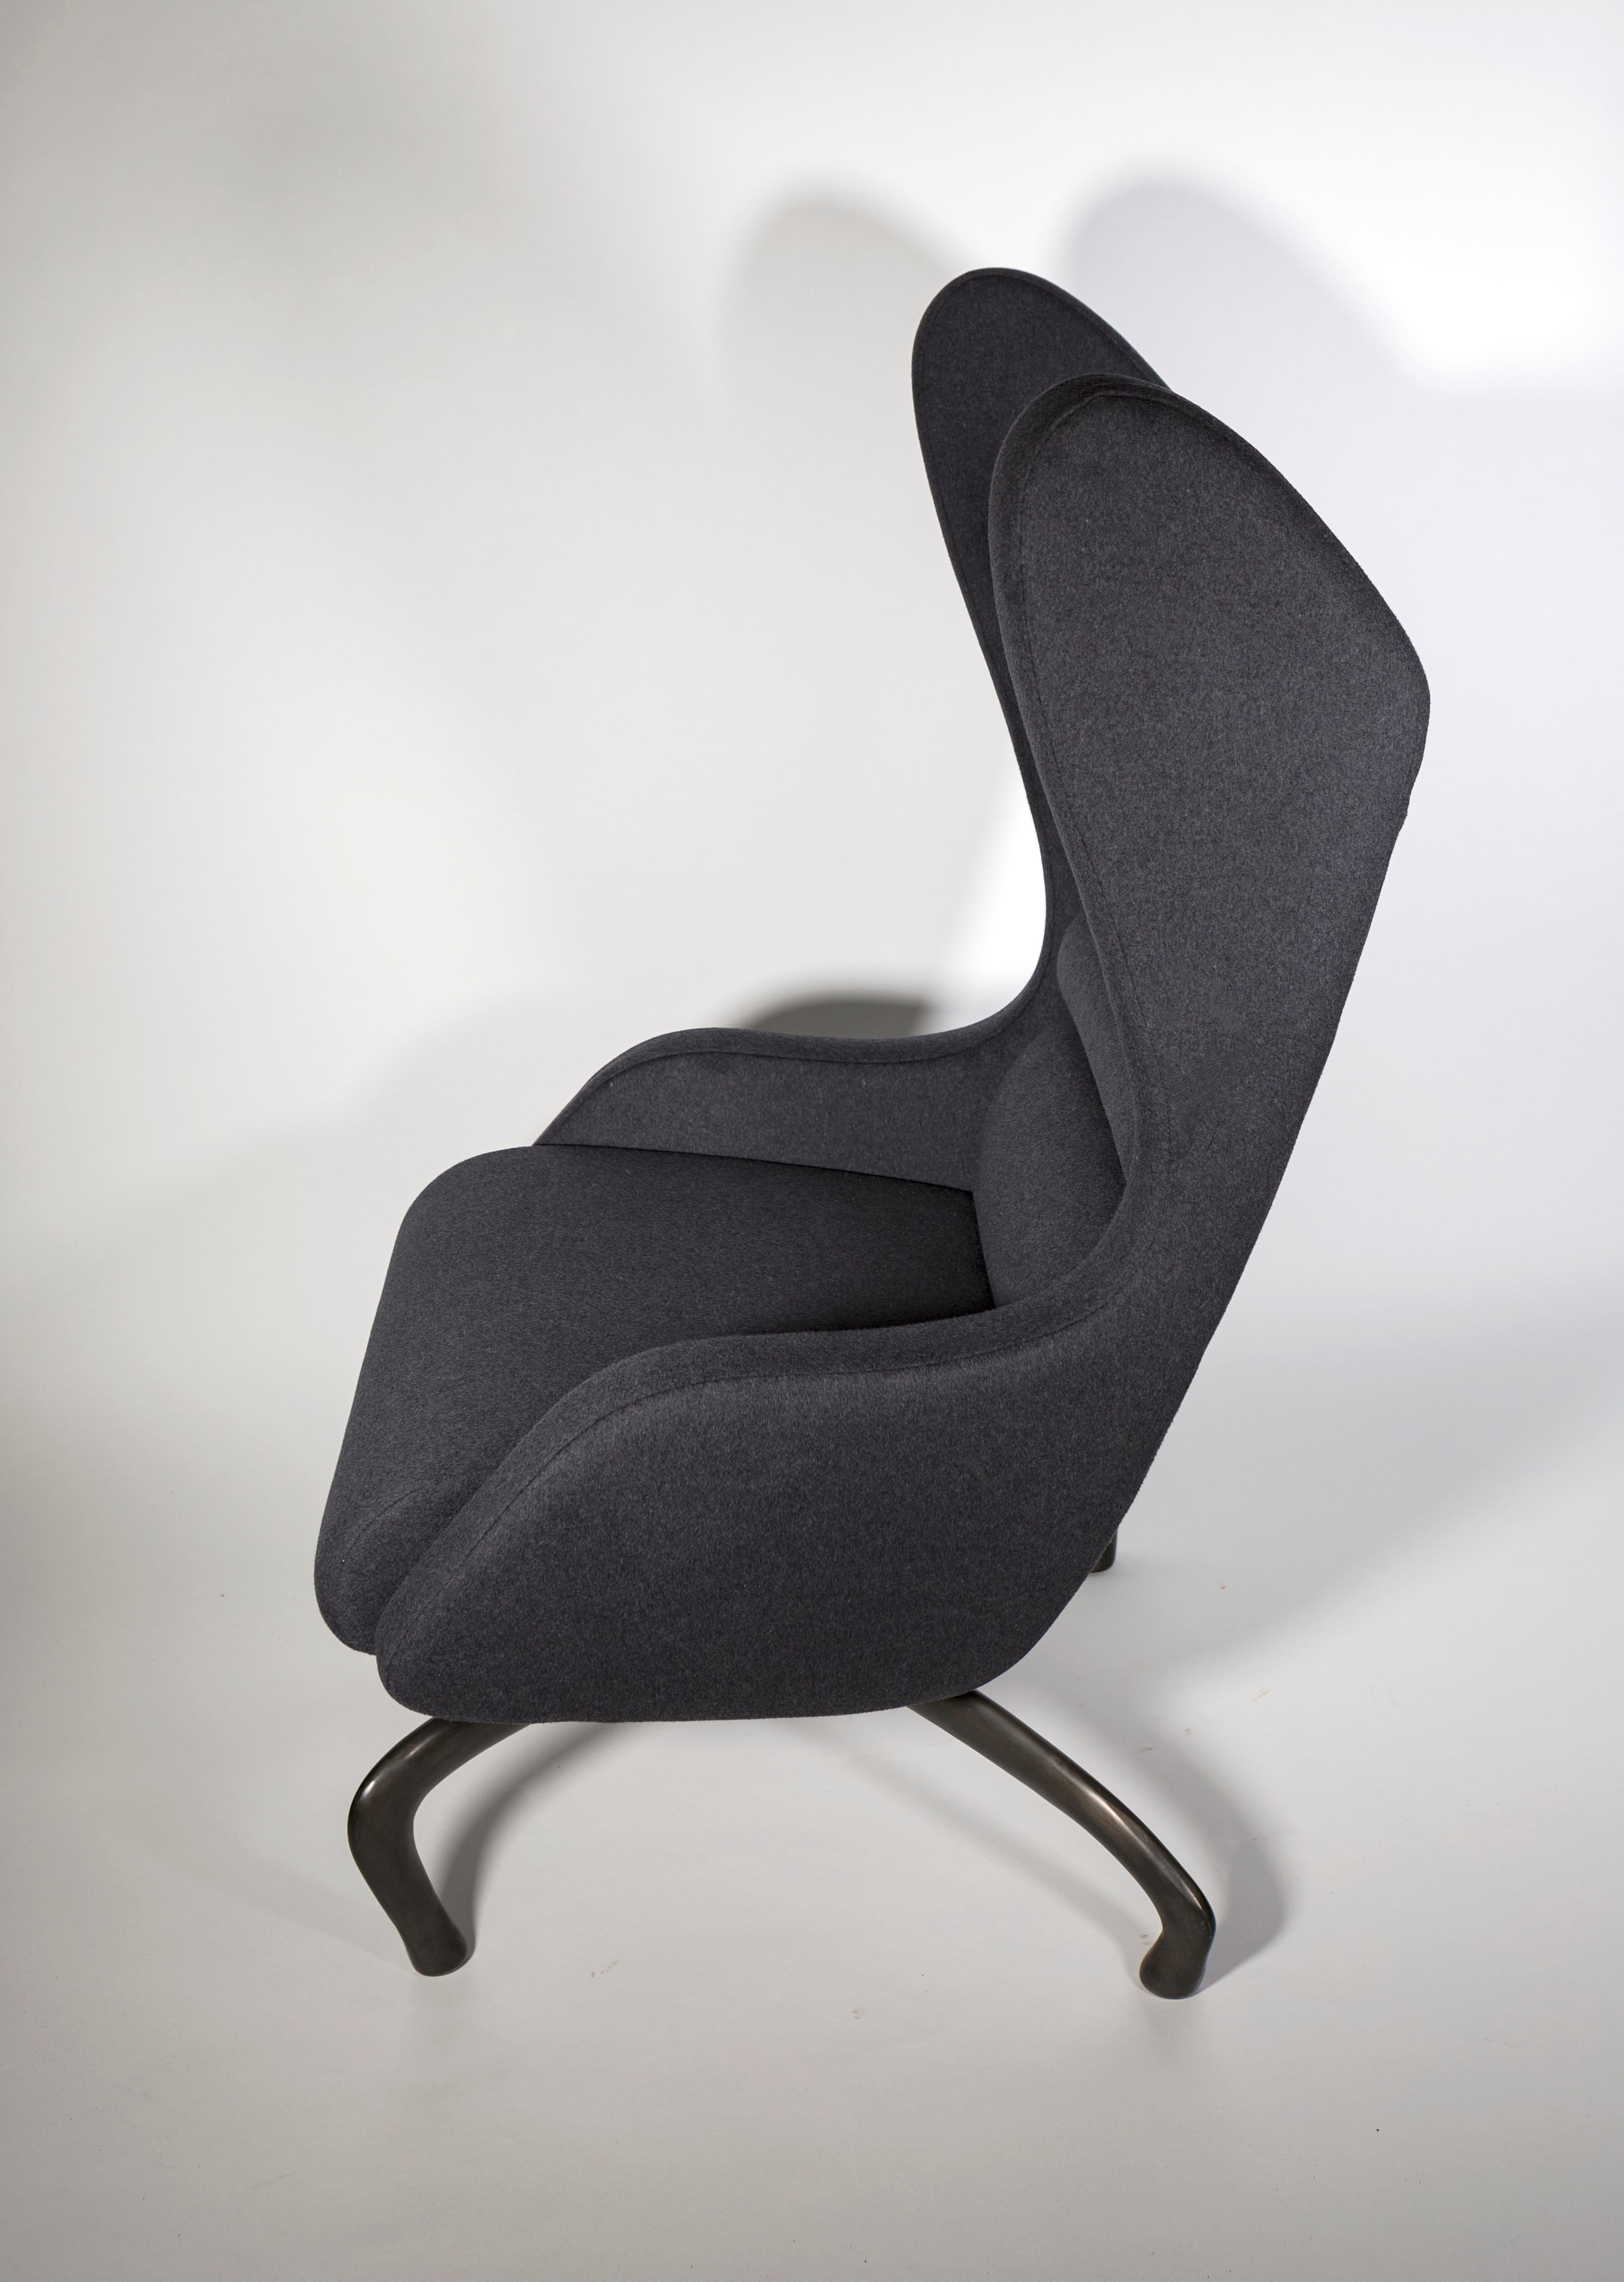 Cantering Lounge Chair, Leather / Cast Aluminium, Jordan Mozer, USA, 2003-2018 For Sale 4